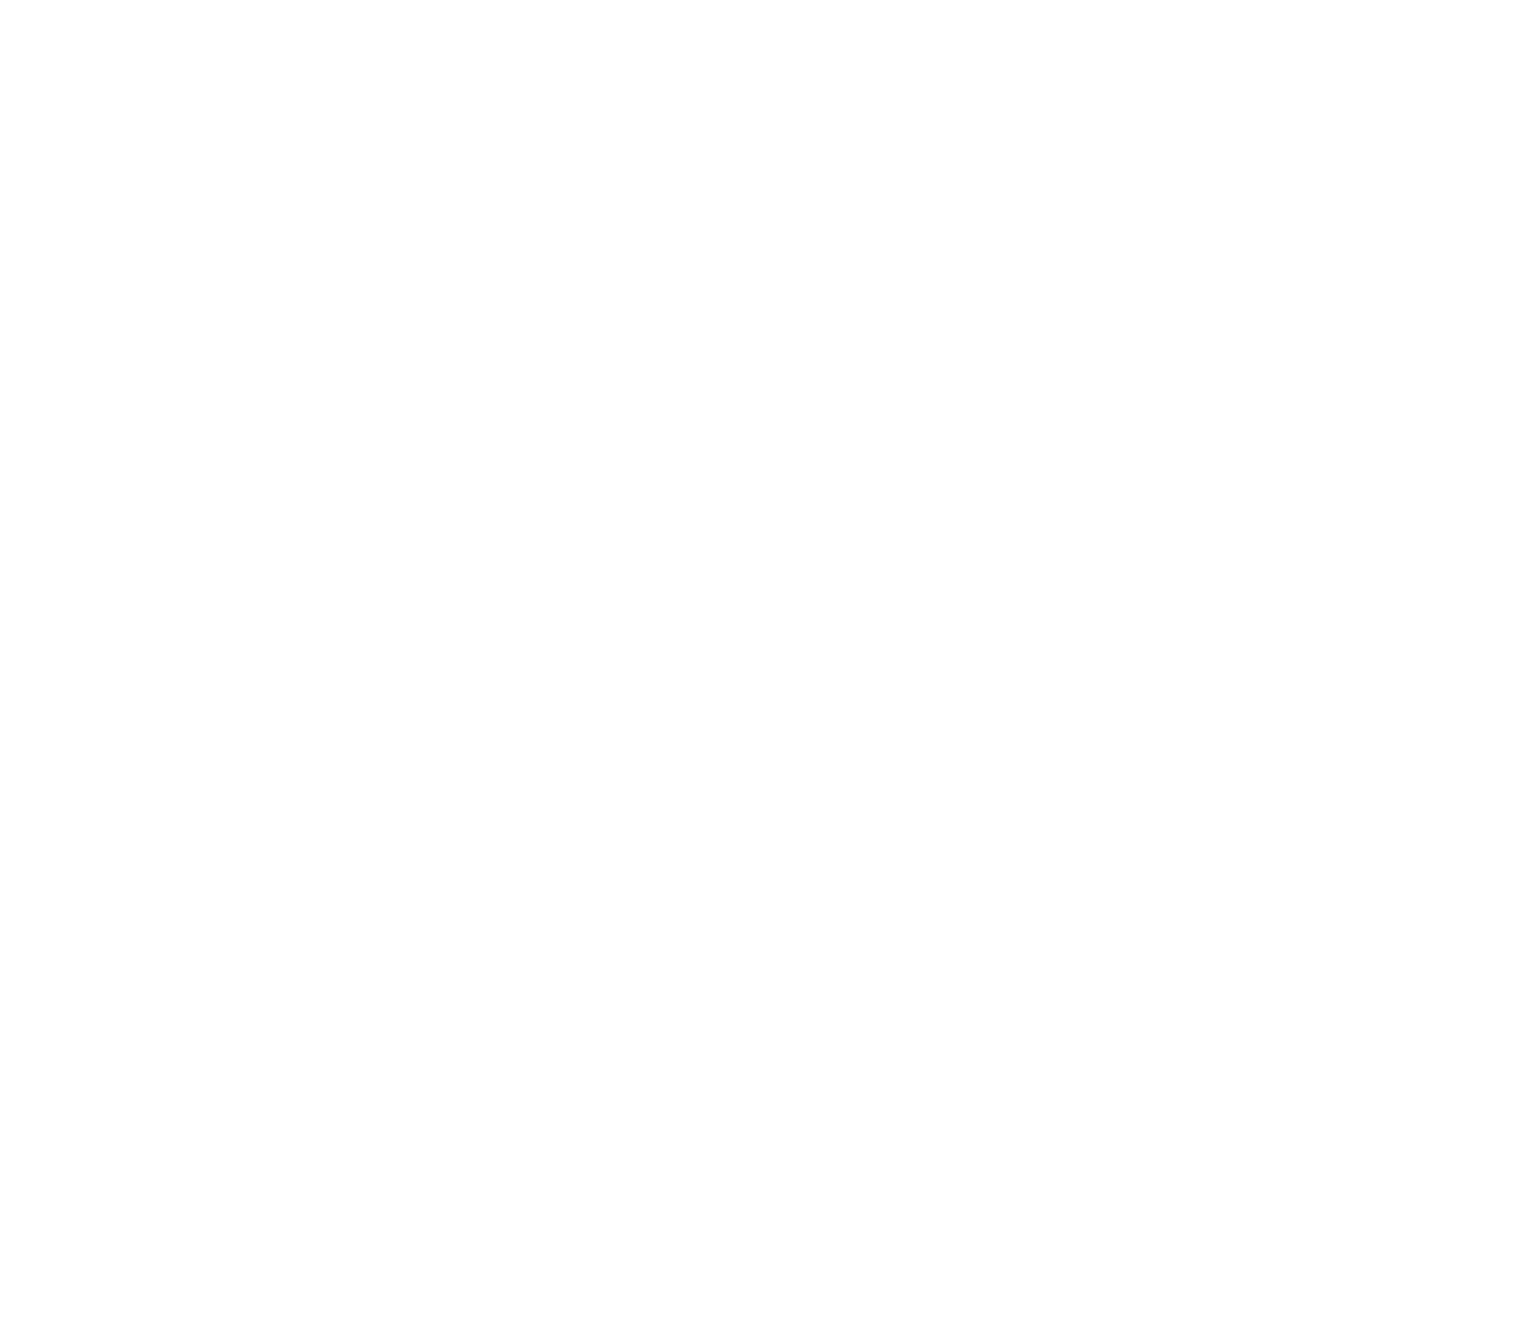 marmoset toolbag